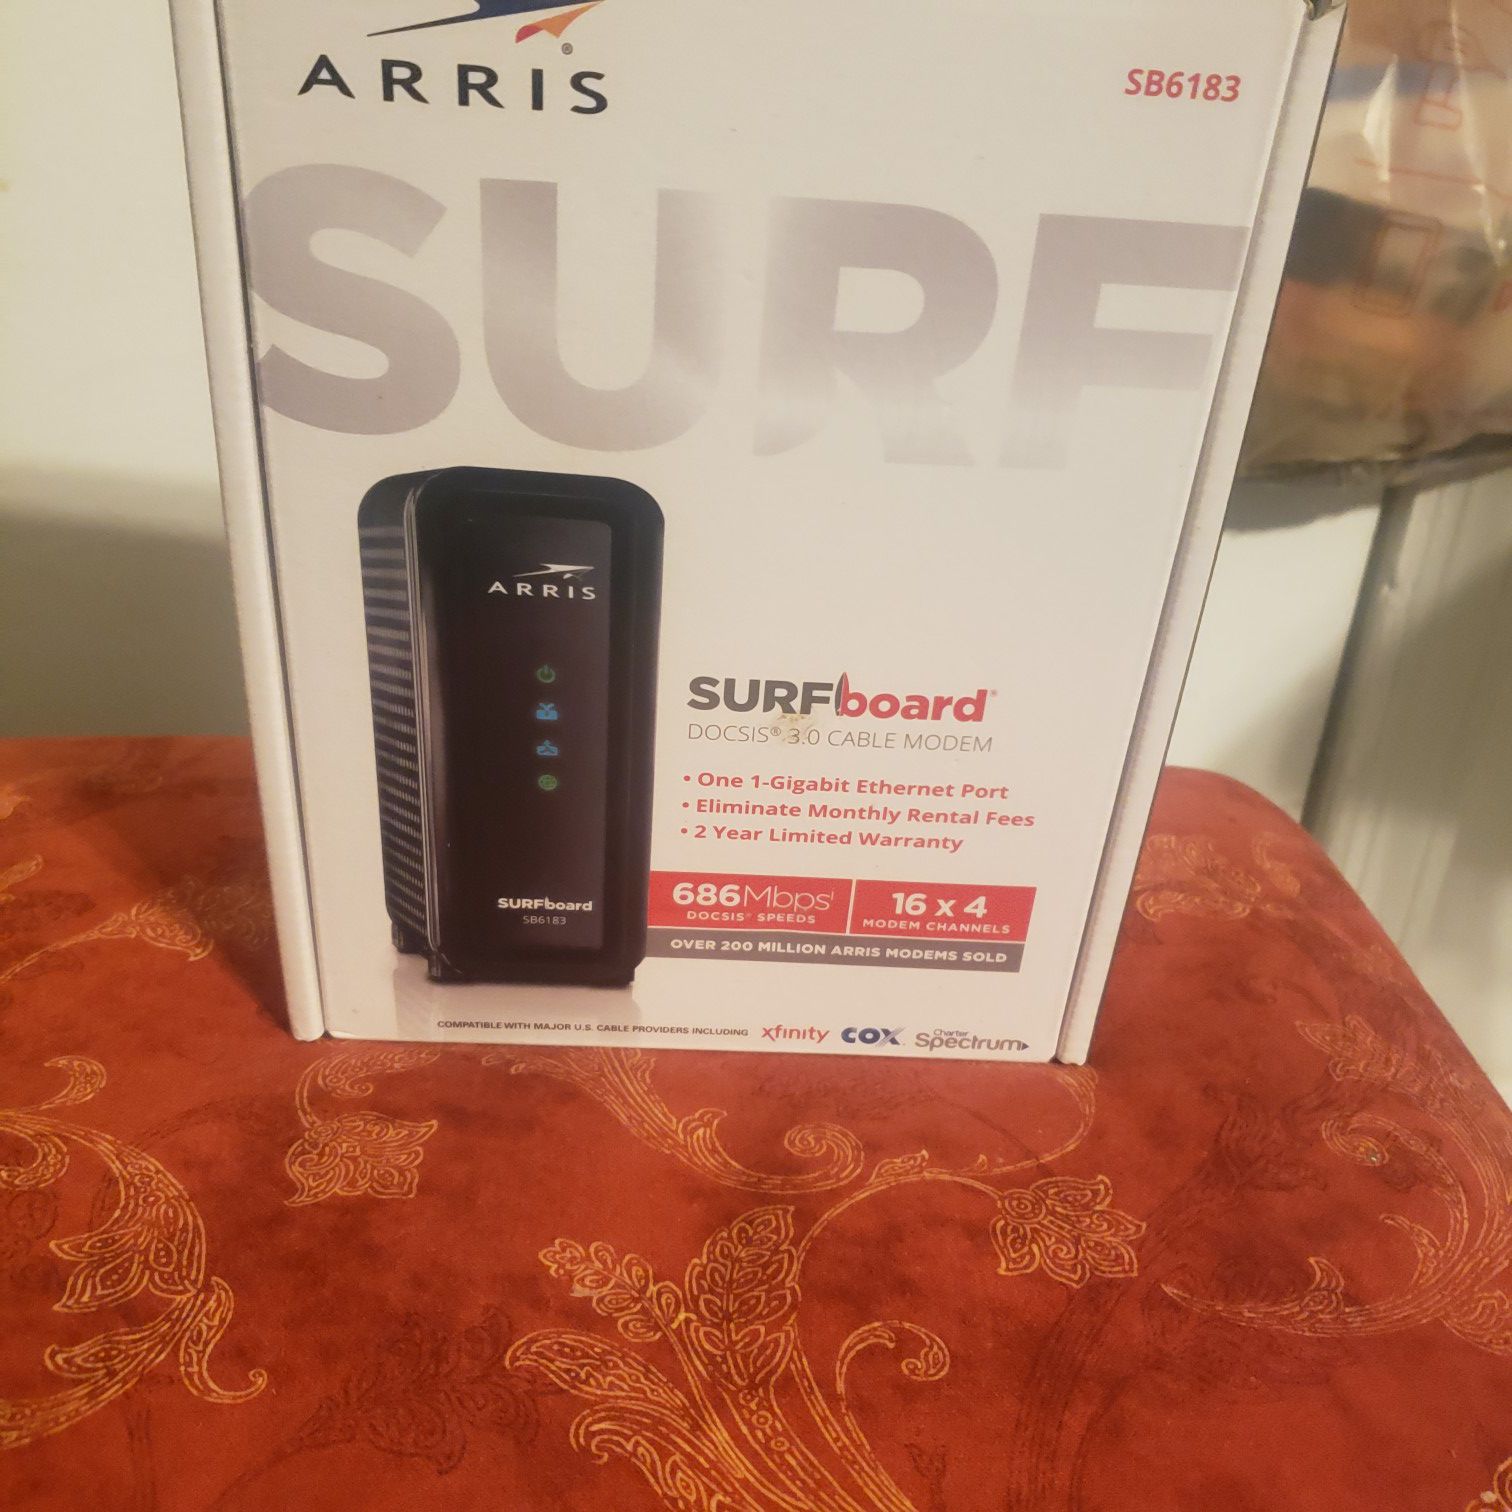 Arris Surf board modem brand new